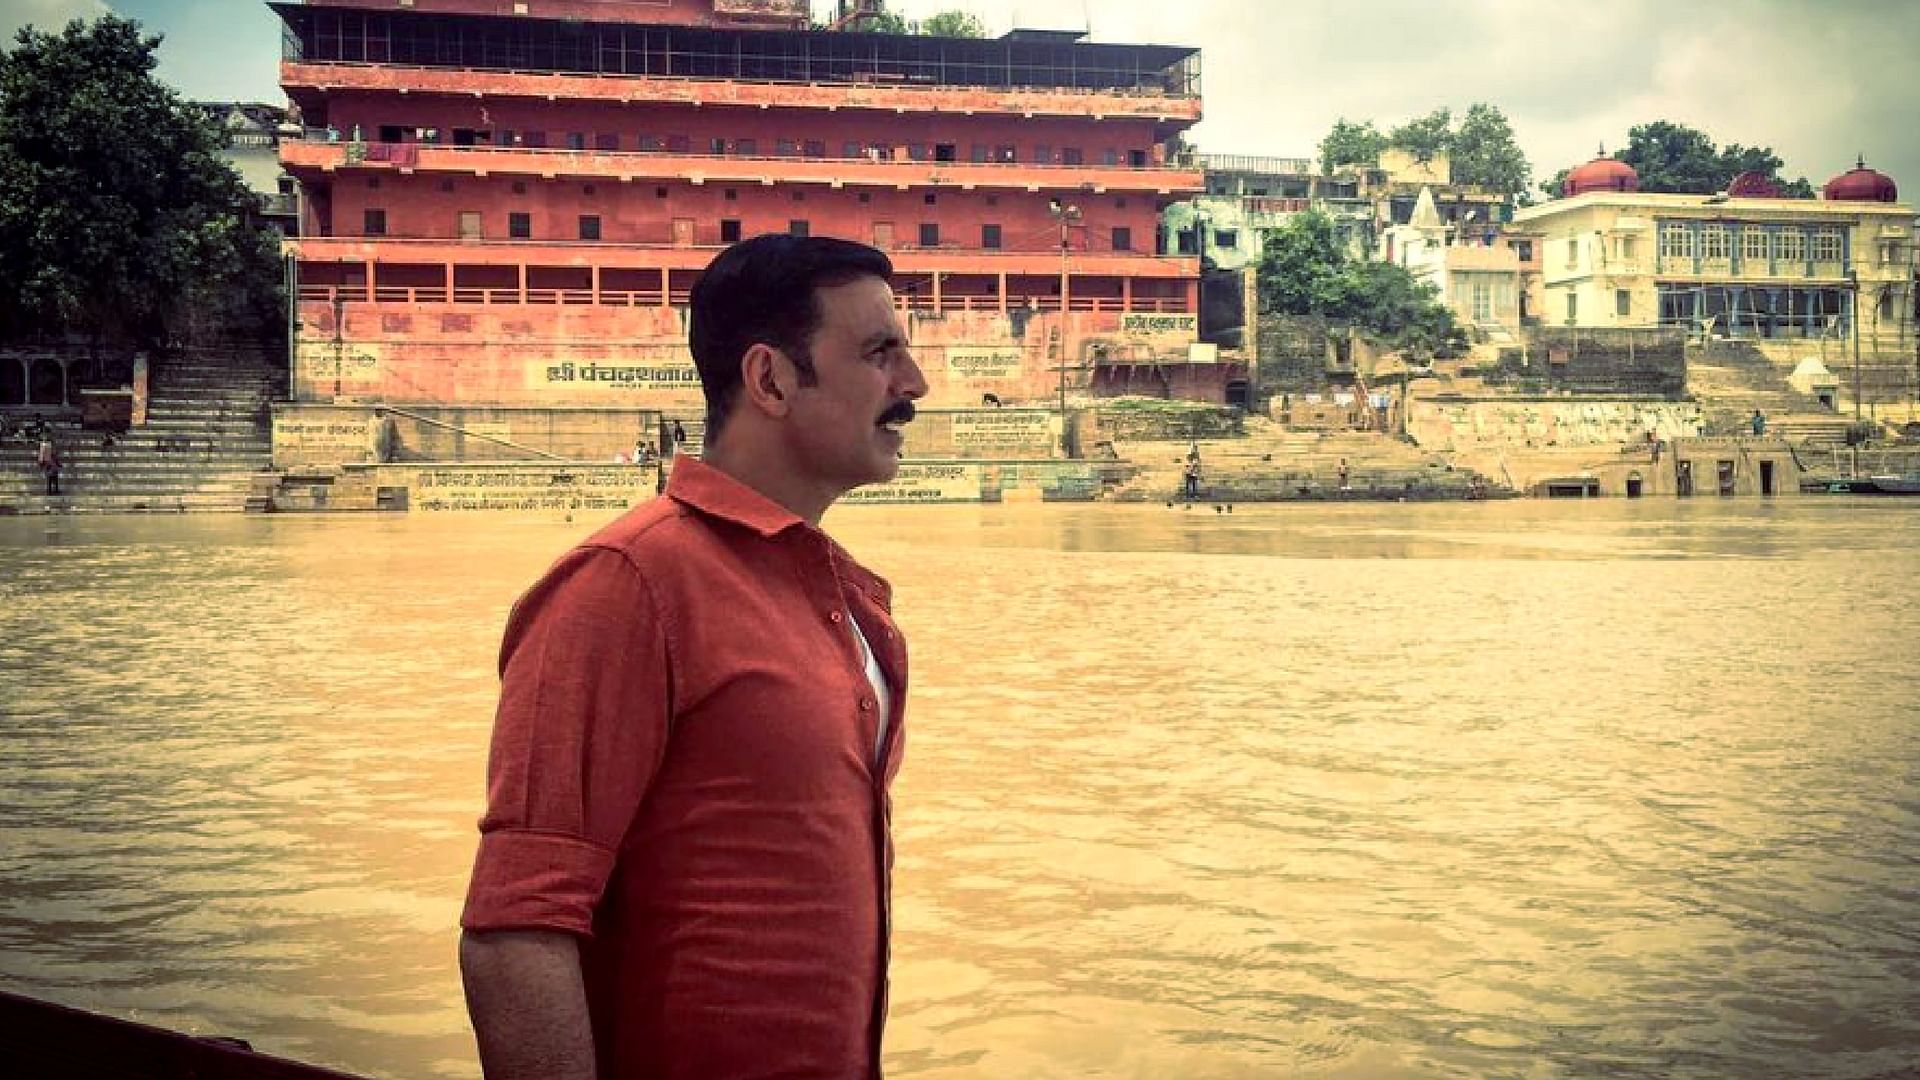 Akshay Kumar feels holy on the banks of the Ganga in Varanasi. (Photo courtesy: Twitter/@AkshayKumar)